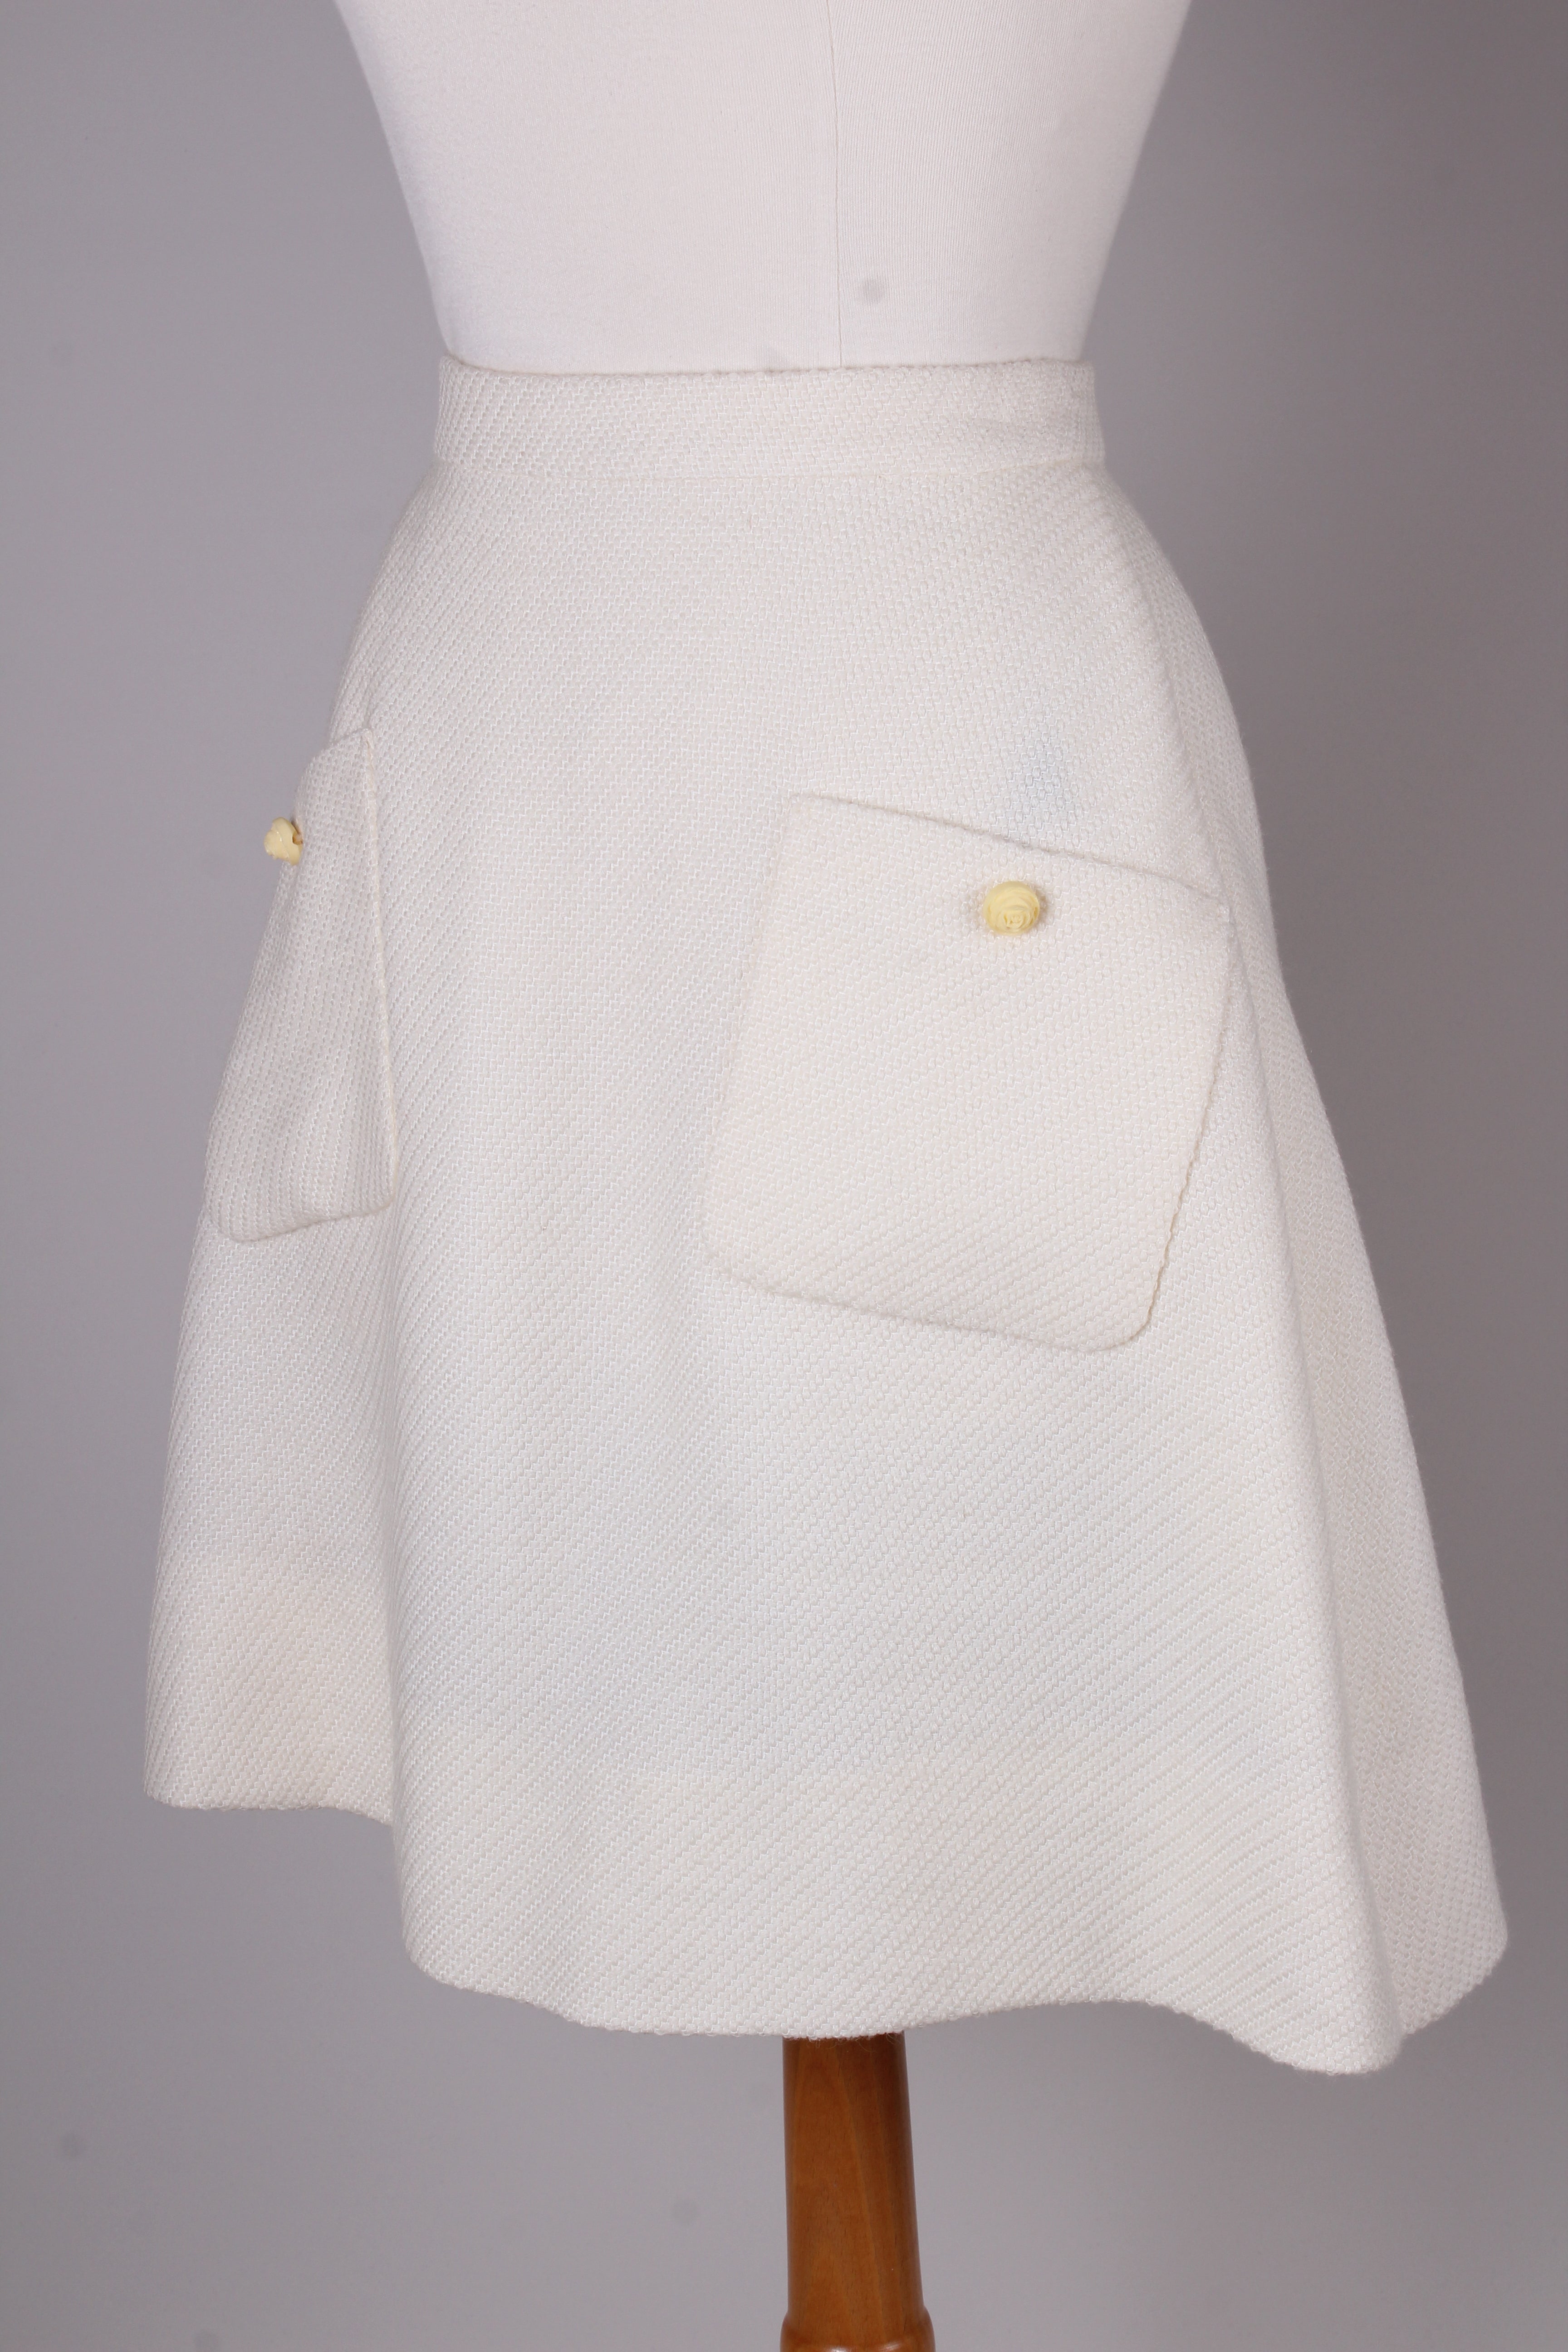 Råhvid nederdel, uld, 1960. Xs-S